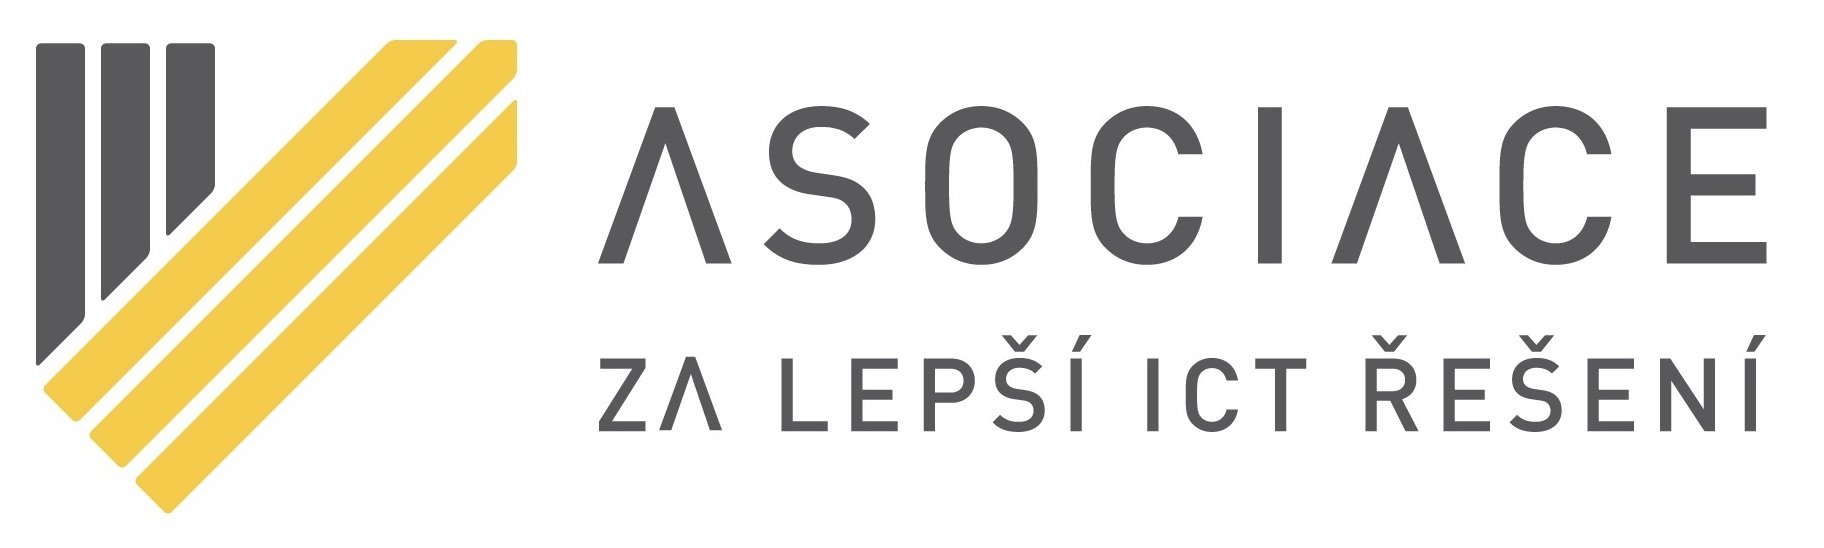 asociace-za-lepsi-ict-reseni-logo